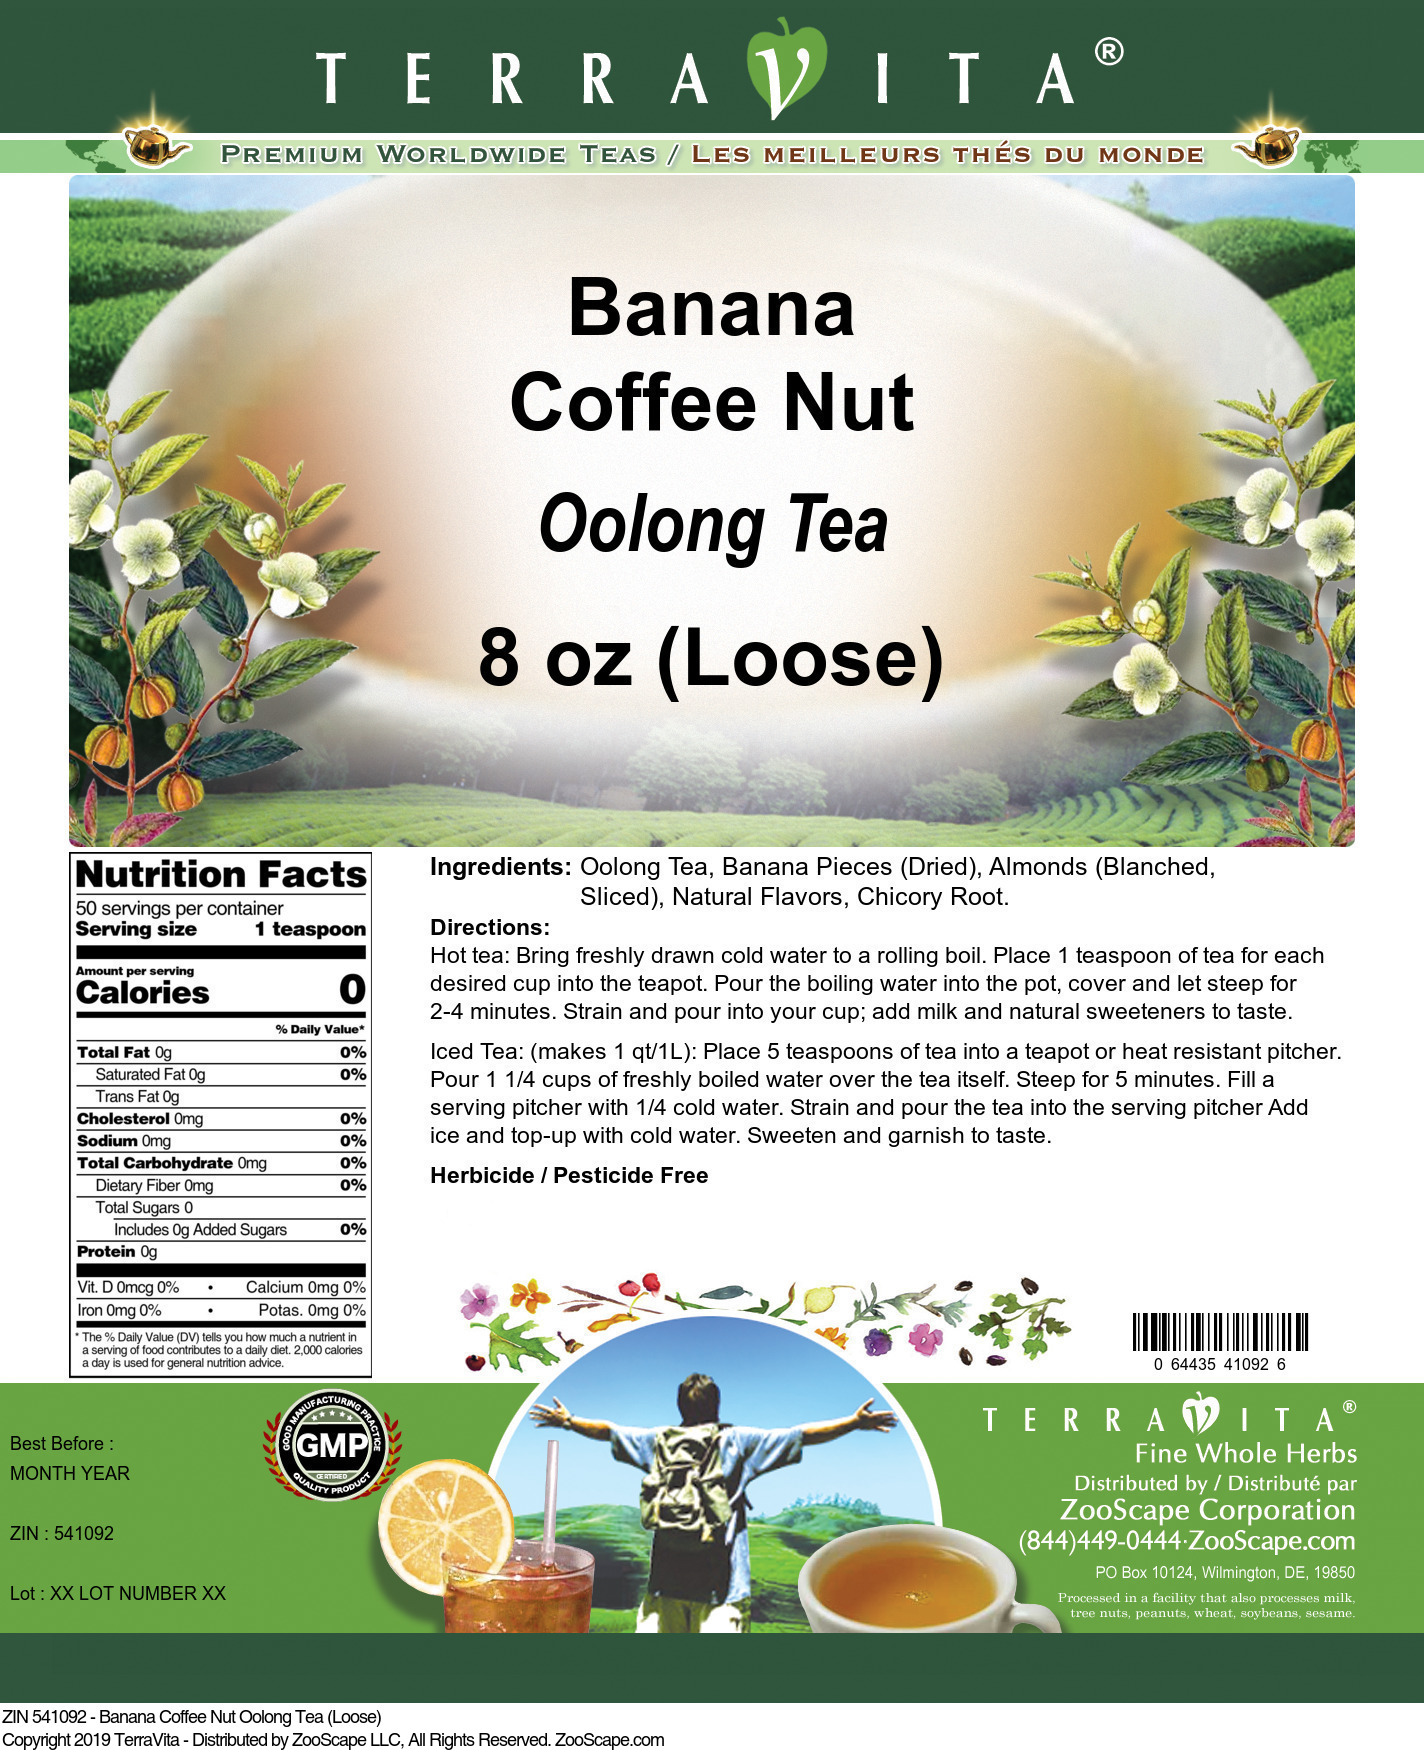 Banana Coffee Nut Oolong Tea (Loose) - Label